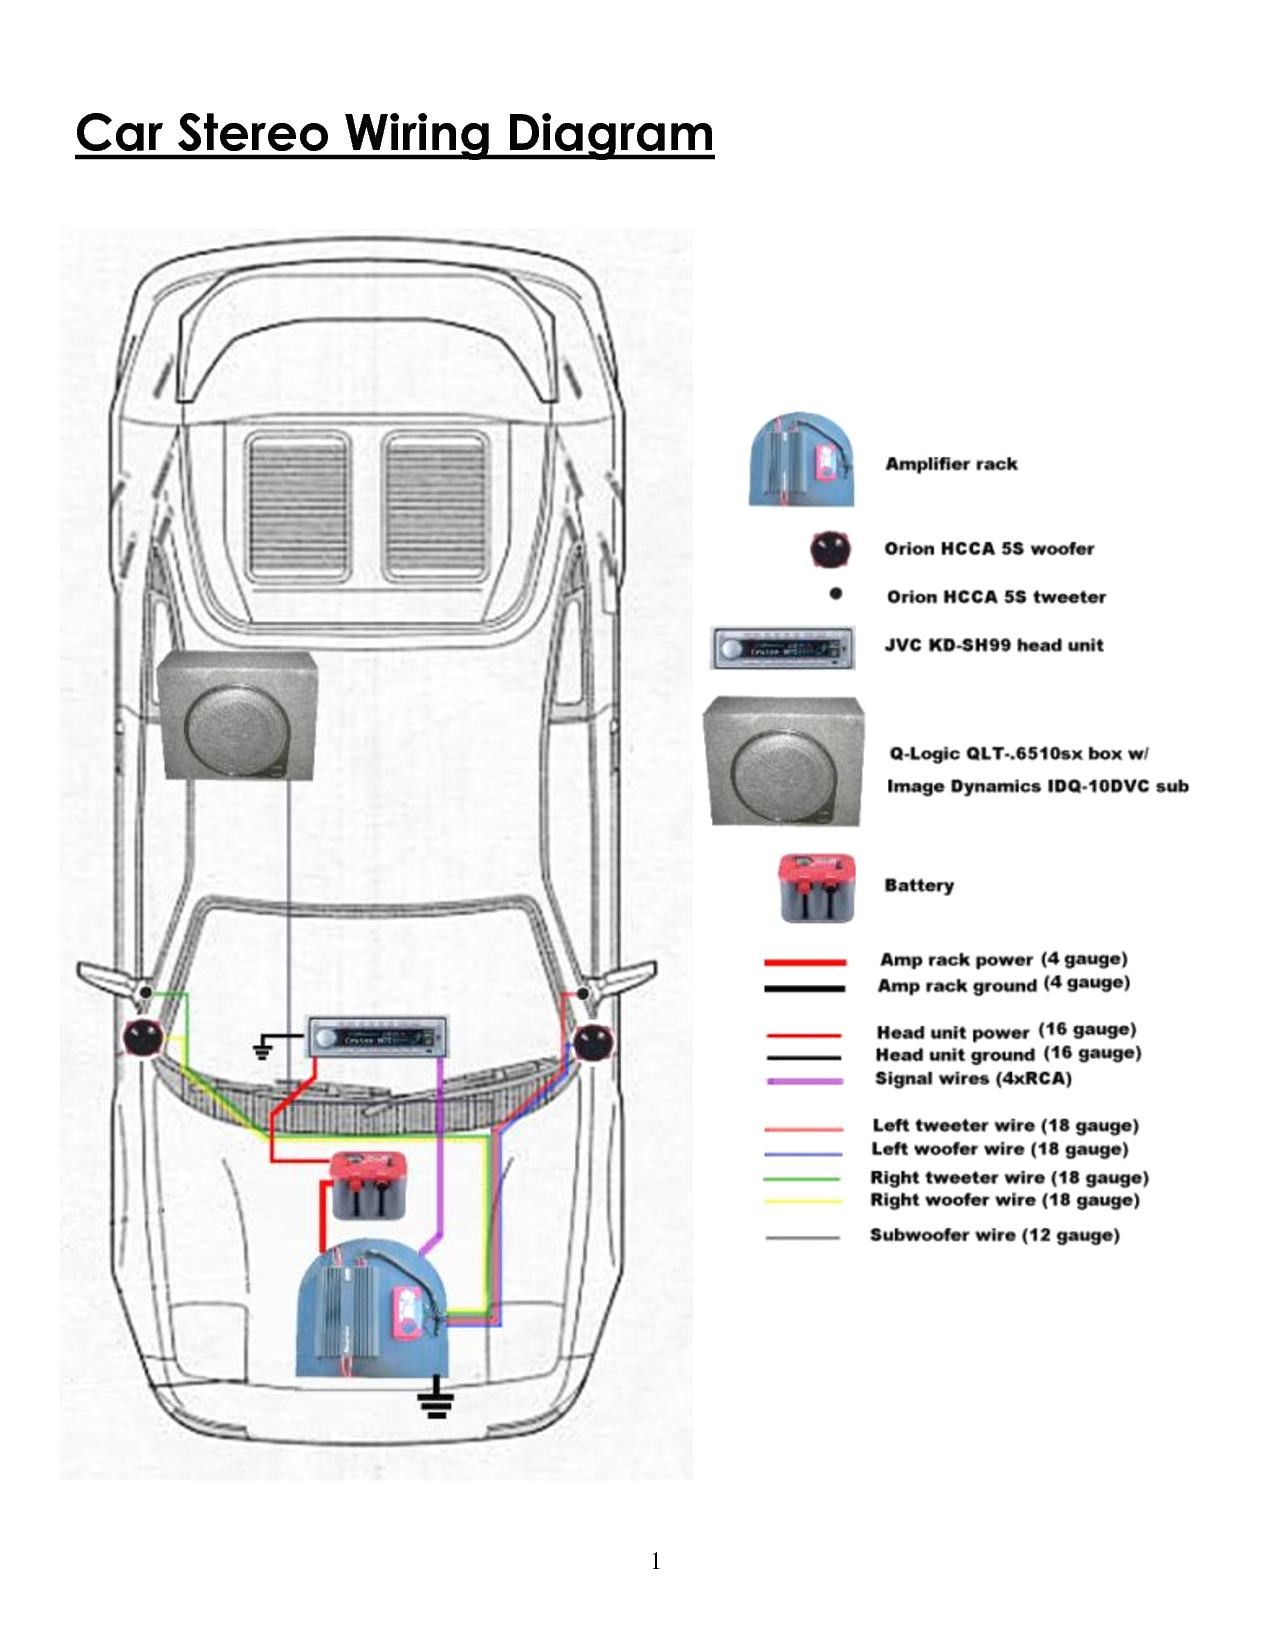 Car Radio Wiring Diagrams Diagram A Car Best Sample Unique Radio Wiring Great Creation Of Car Radio Wiring Diagrams